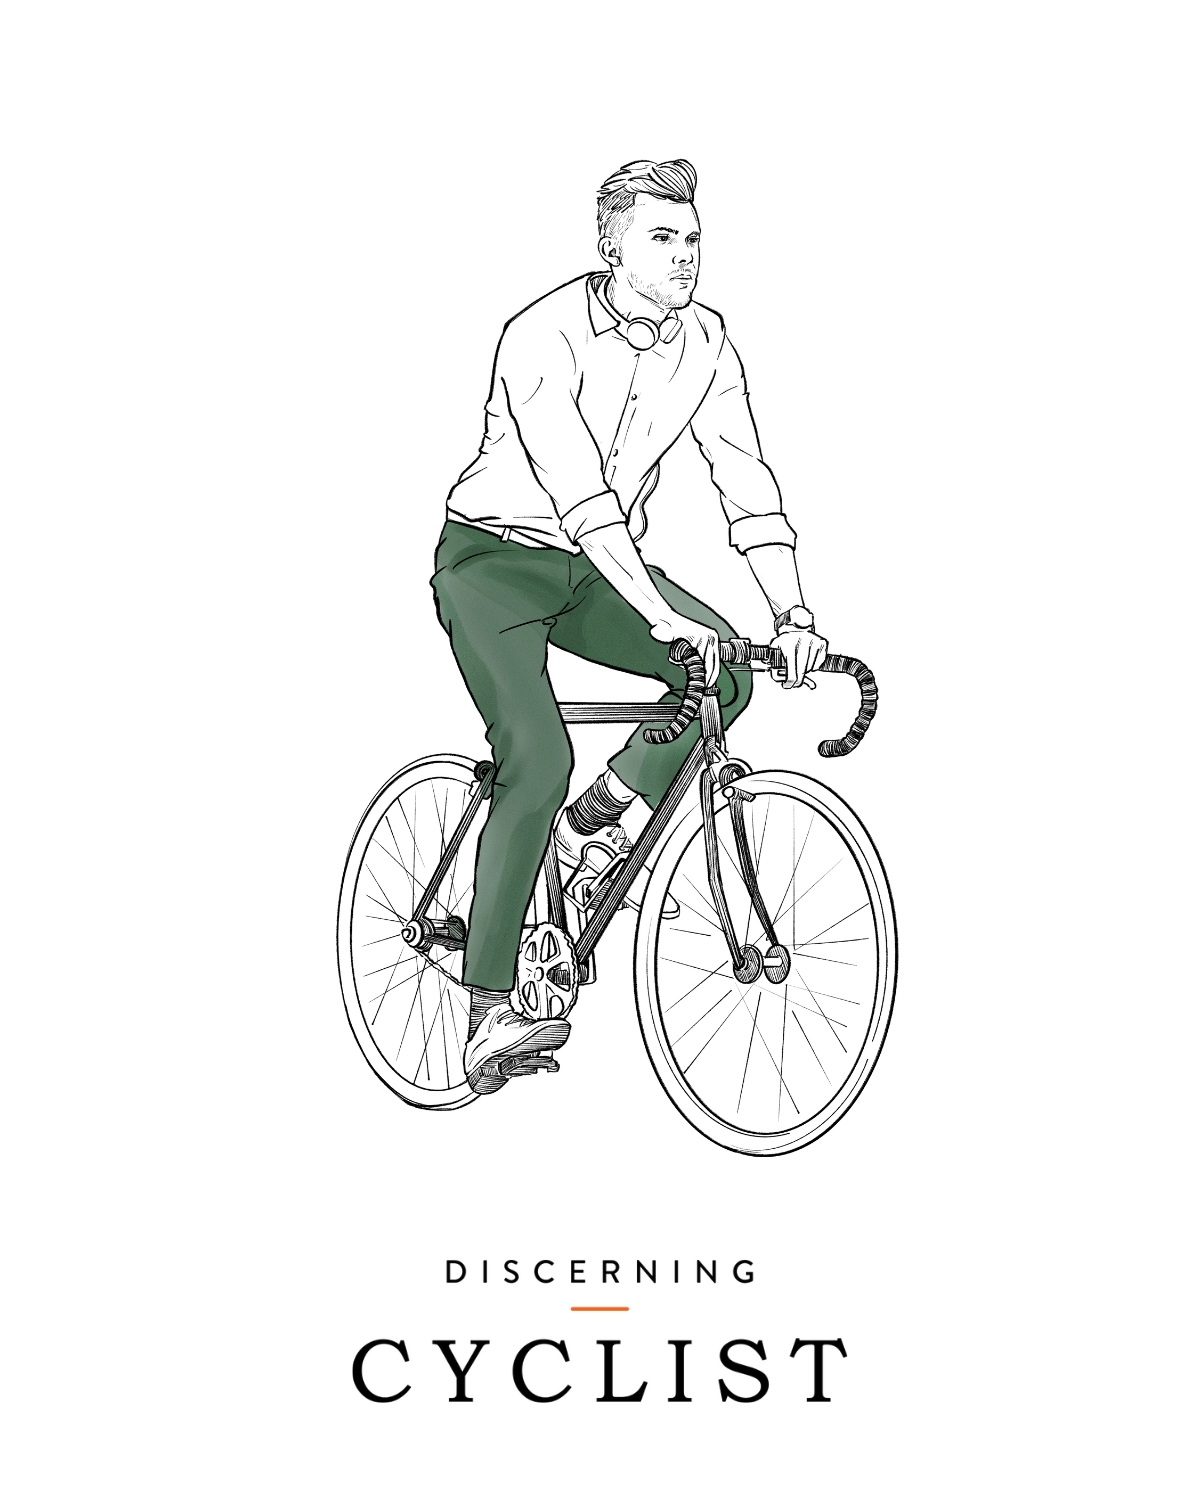 Office guy cyclist illustration